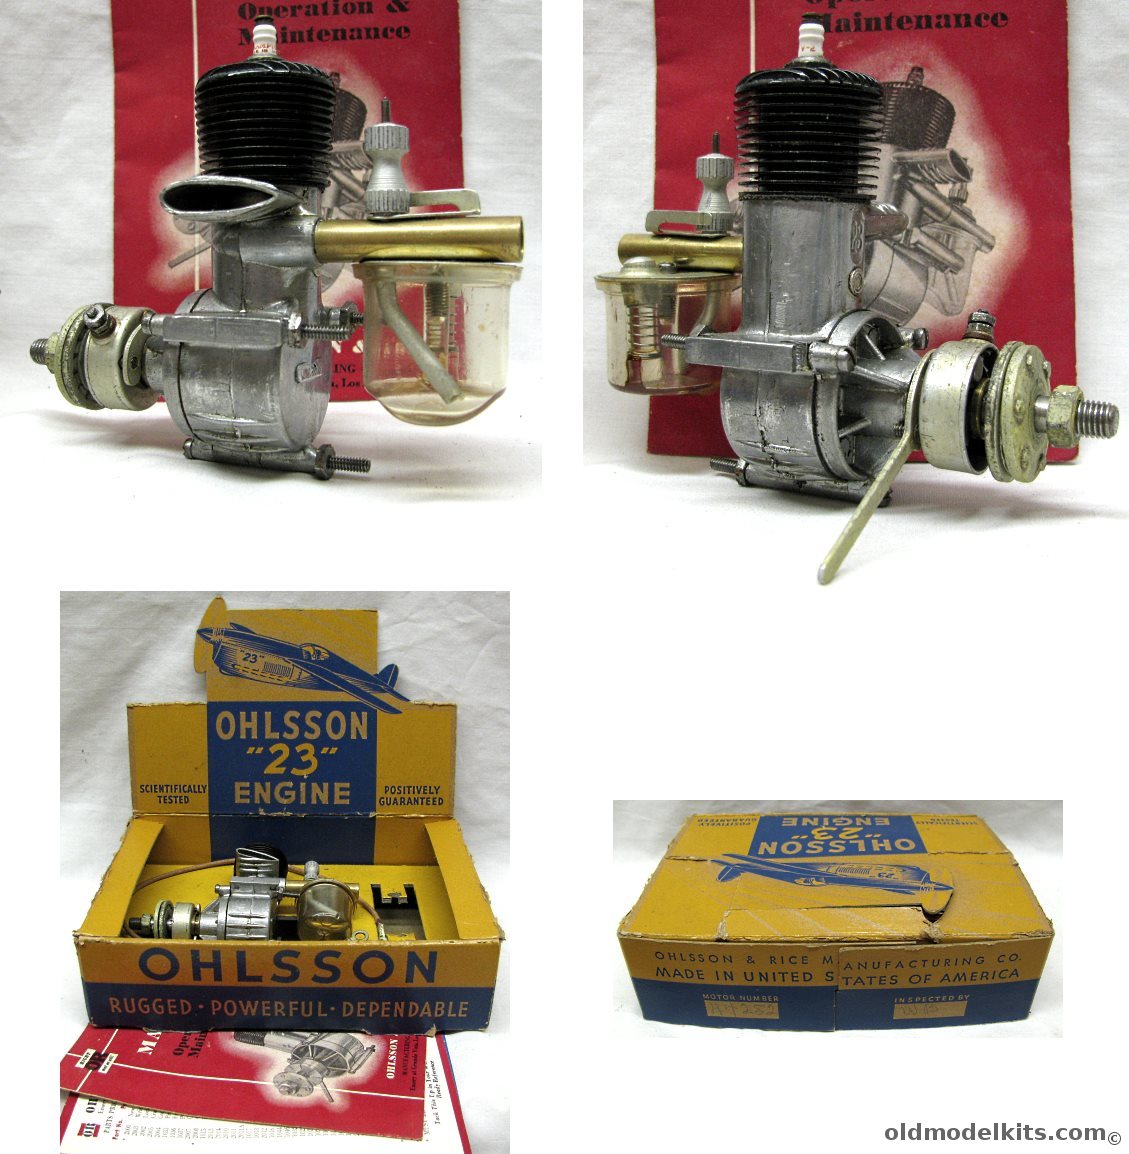 Ohlsson & Rice Ohlsson 23 Gas Ignition Engine, 441 plastic model kit